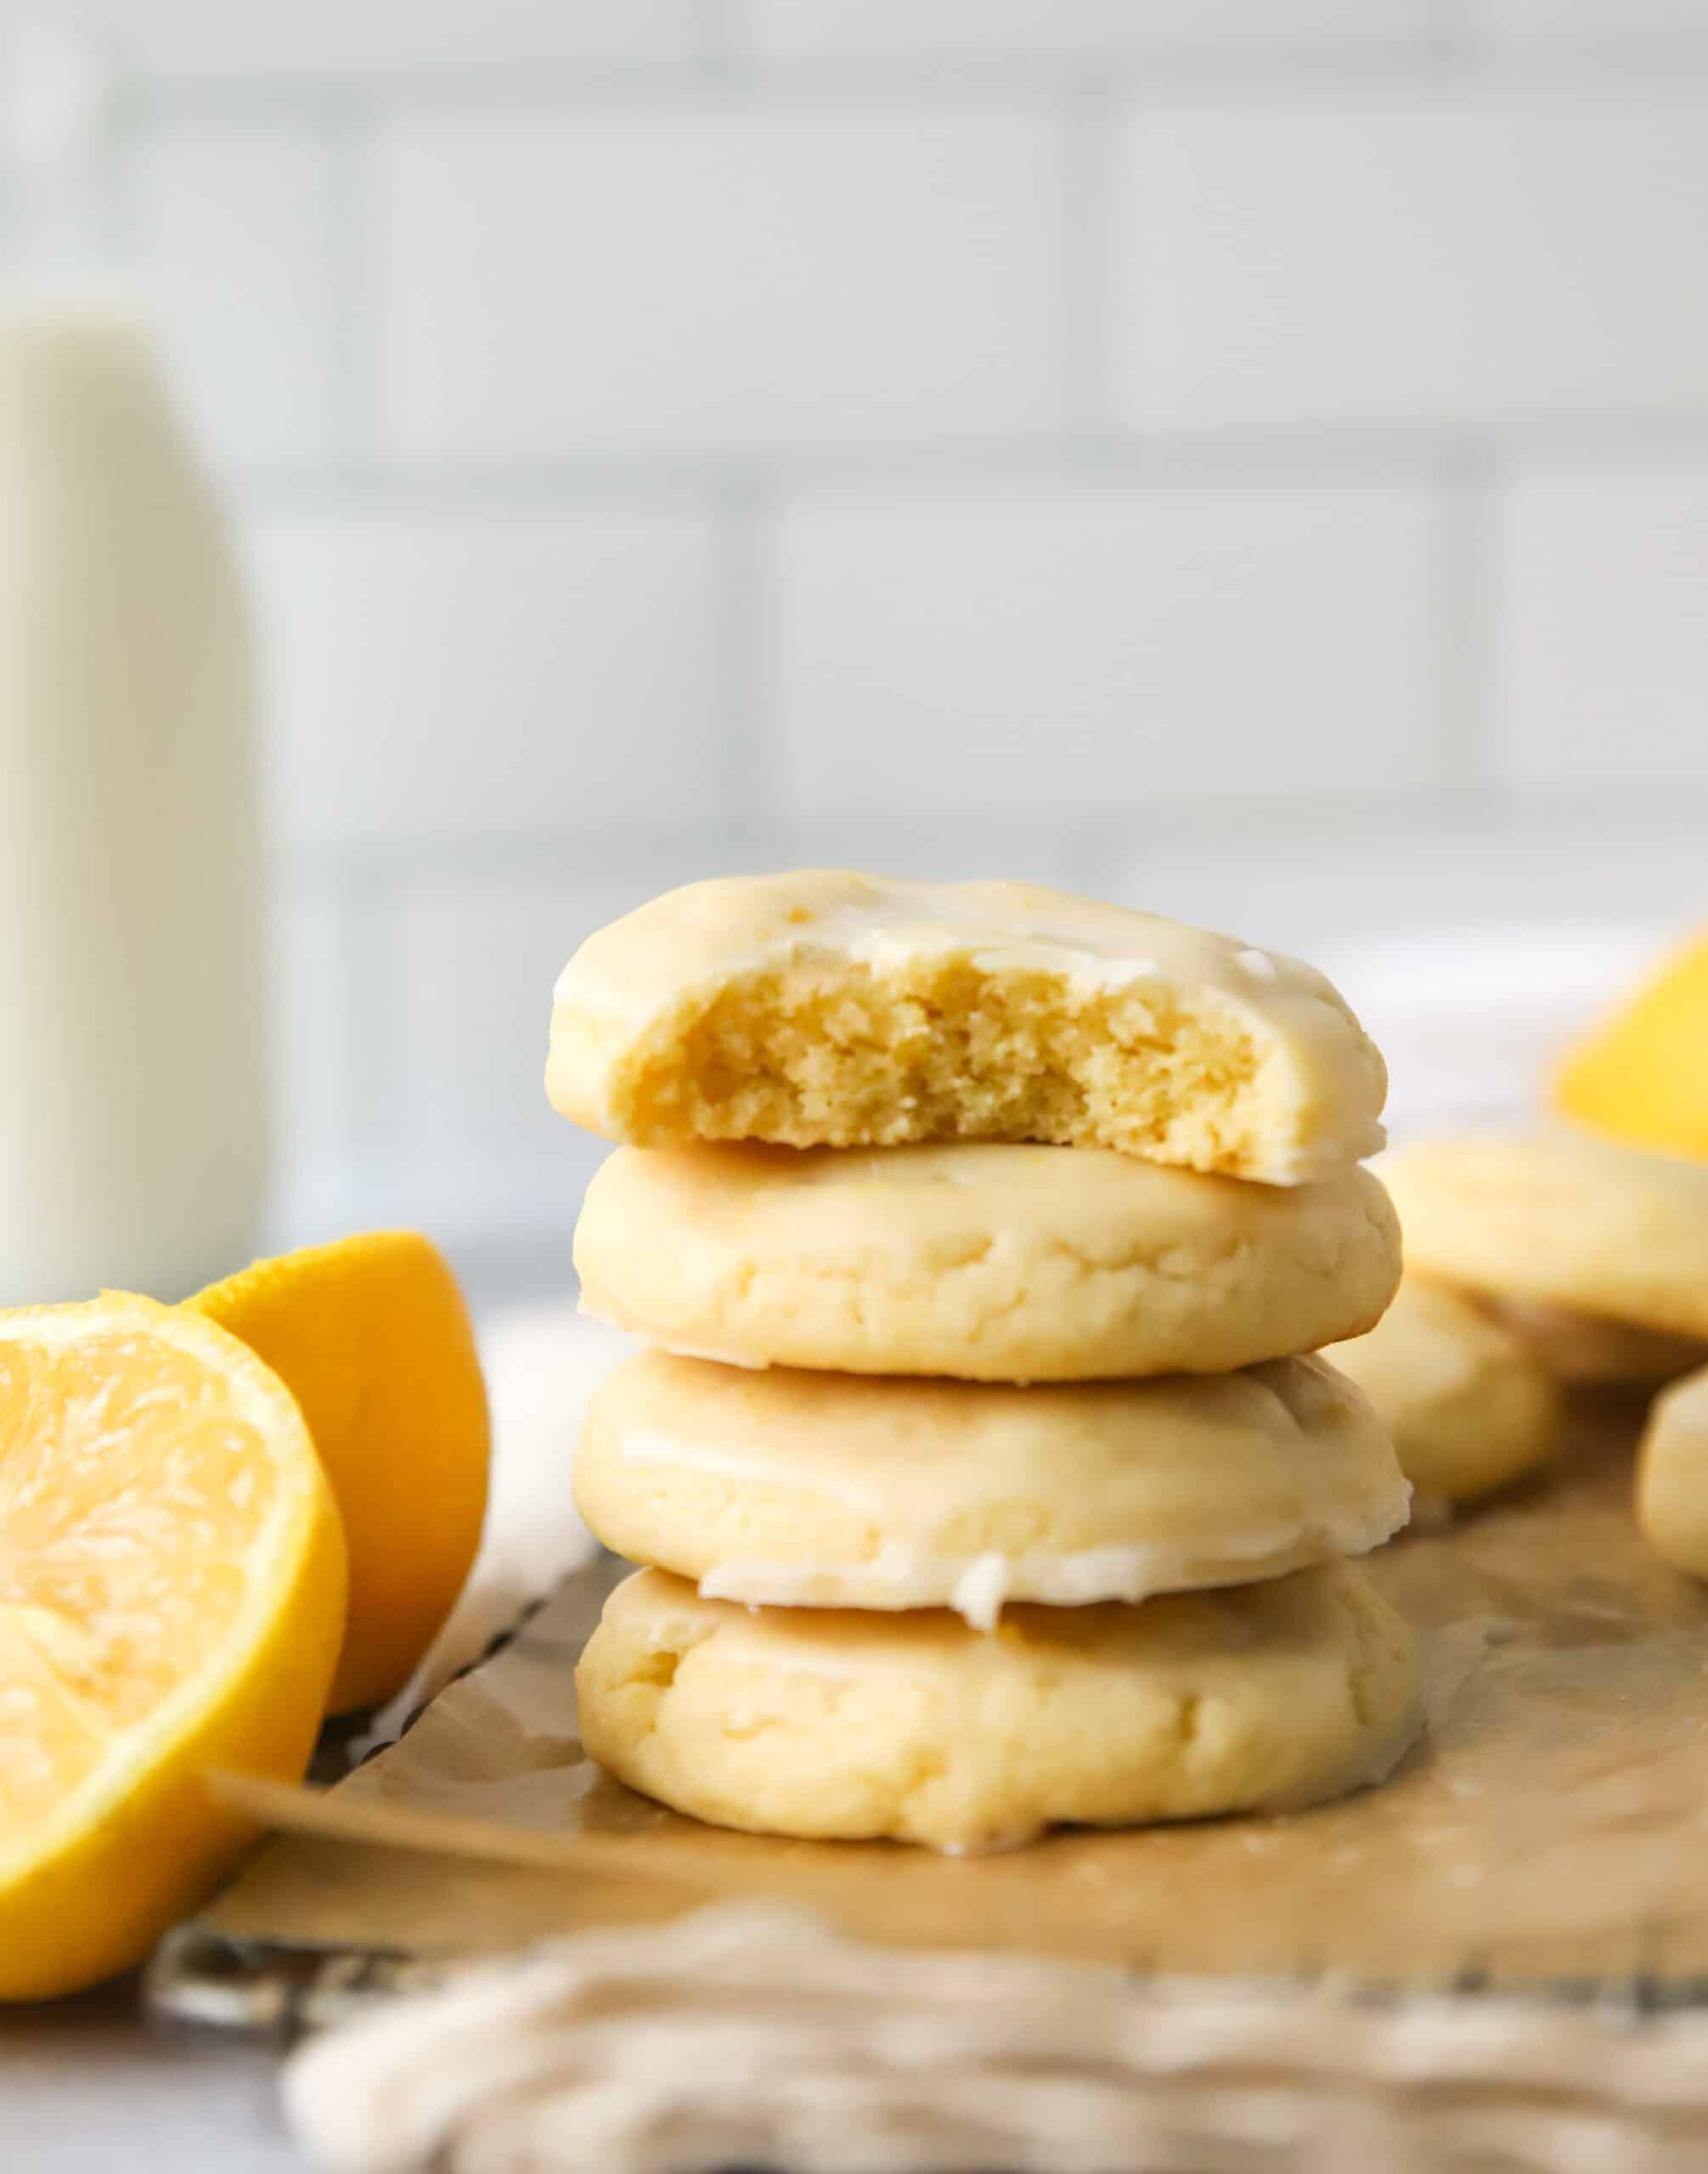 lemon cookie recipe